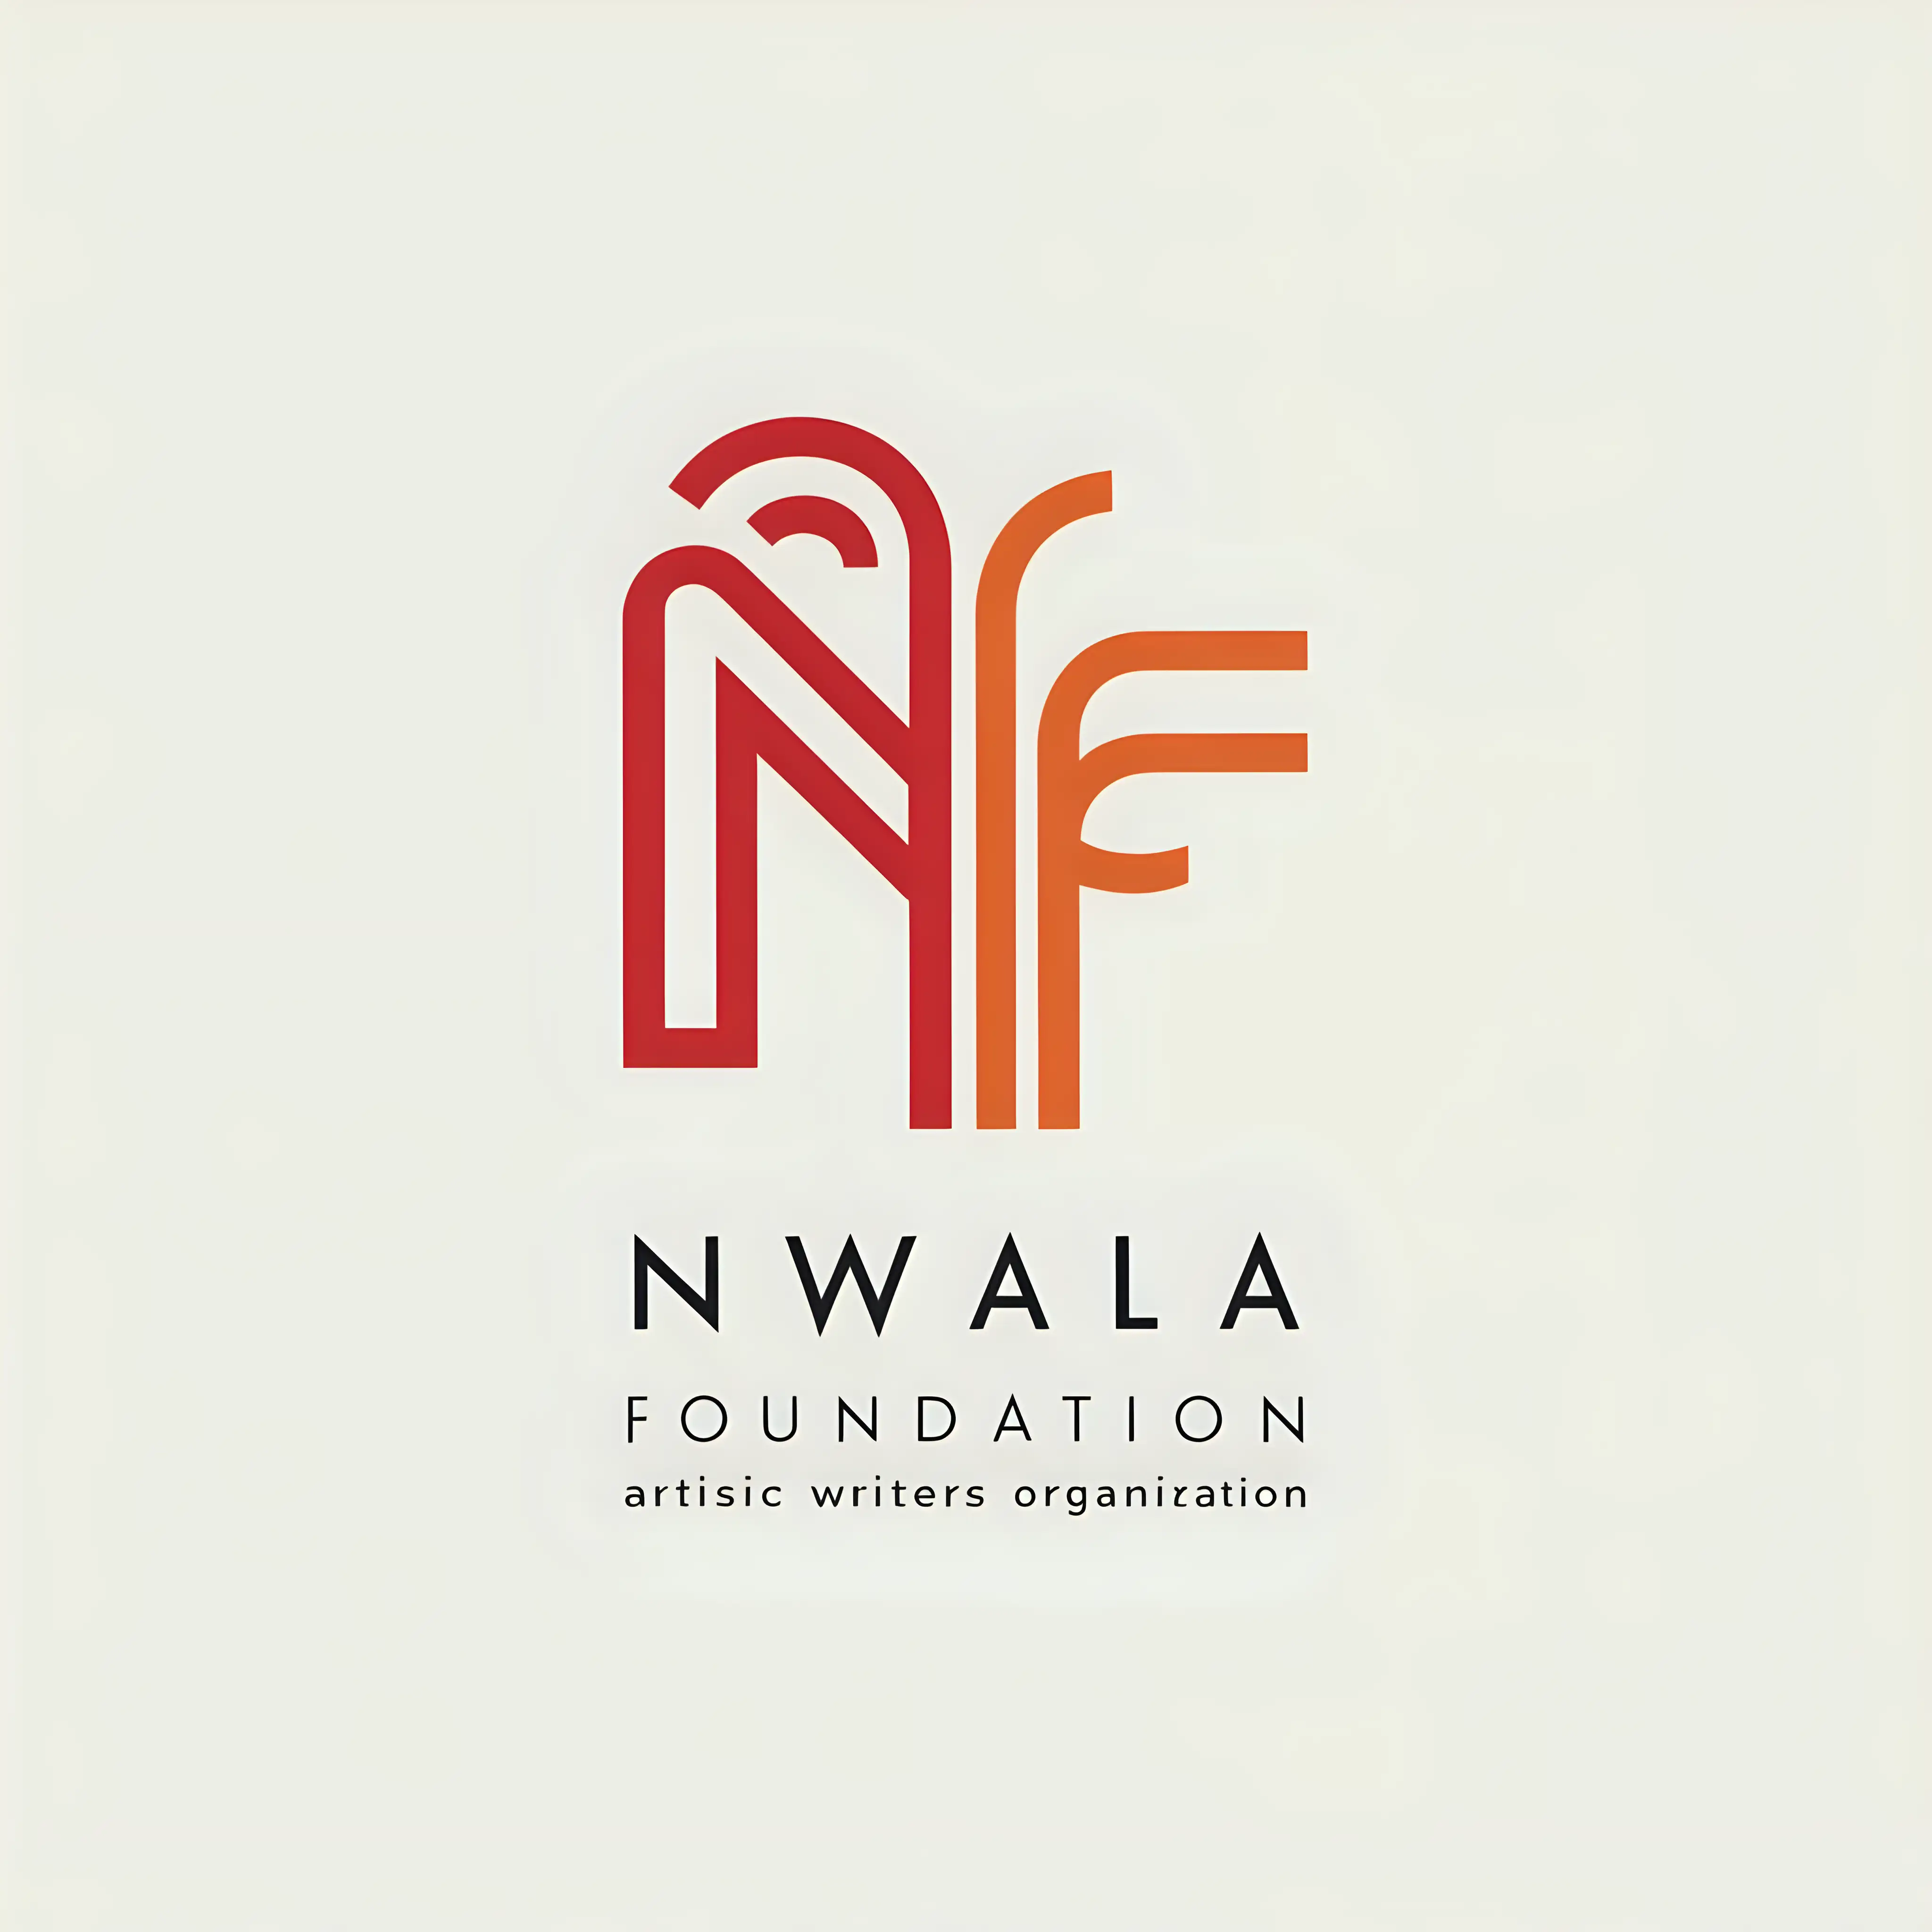 minimalistic logo for artistic writers organisation 'Nwala Foundation' red orange and grey colour, white background